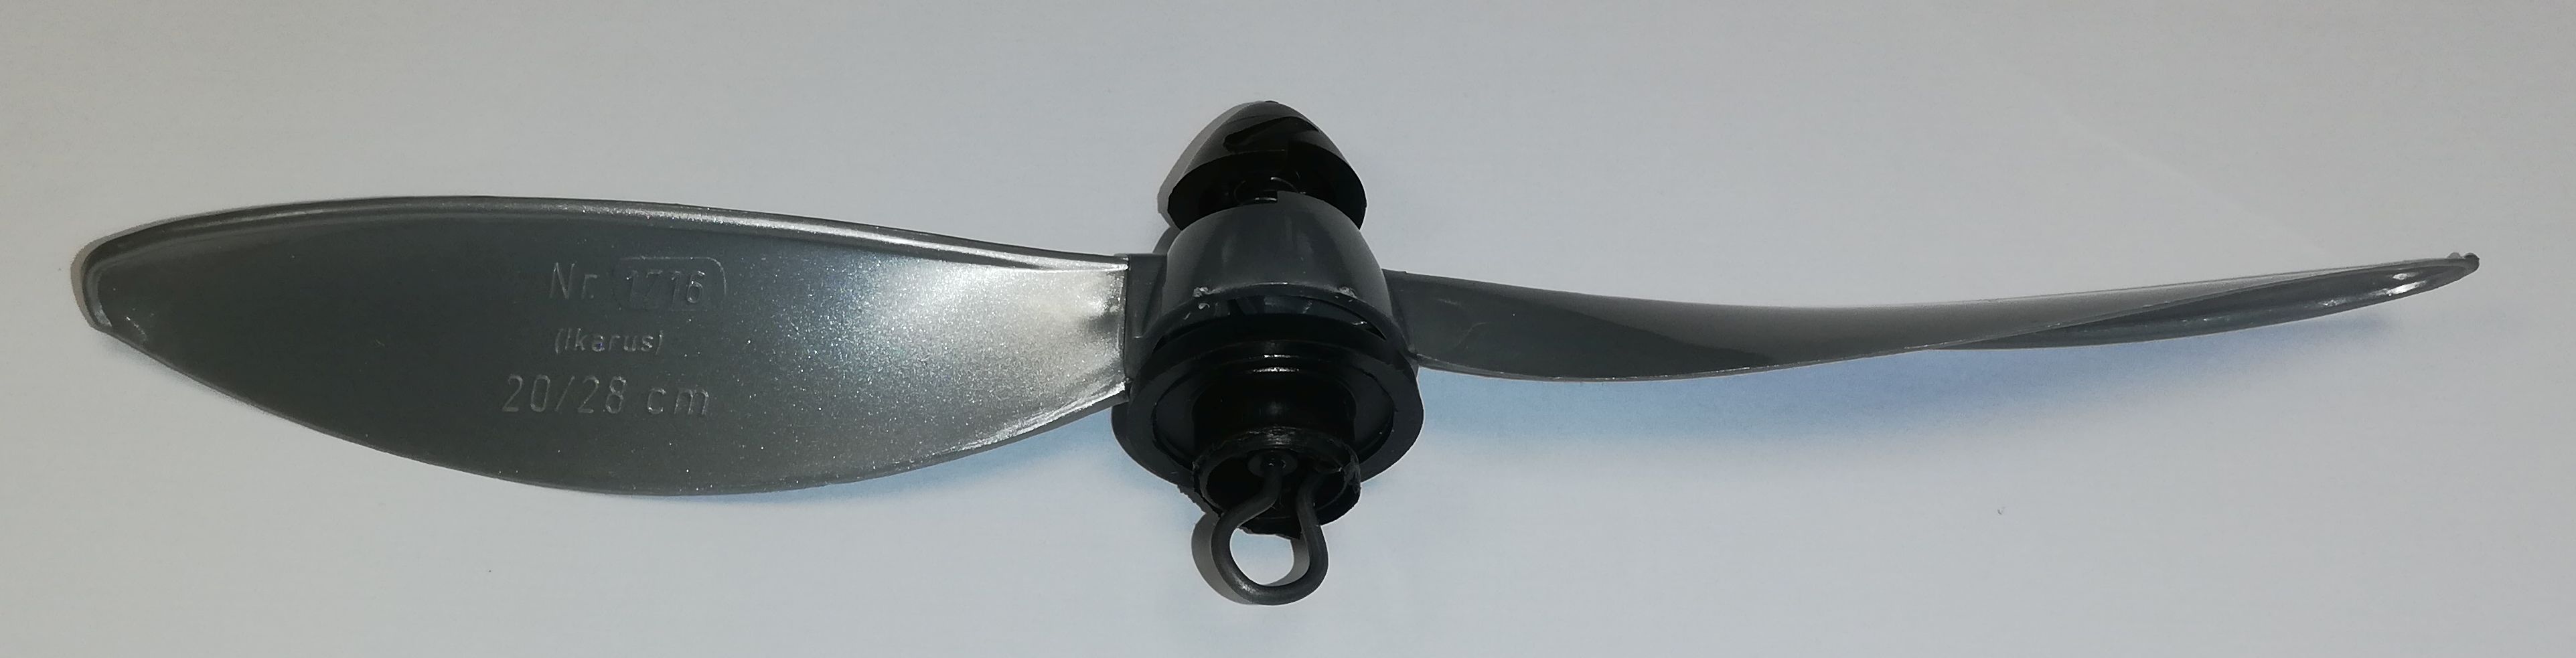 APEX letadlo na gumu s ocelovou konstrukcí křdel, 49x50 cm